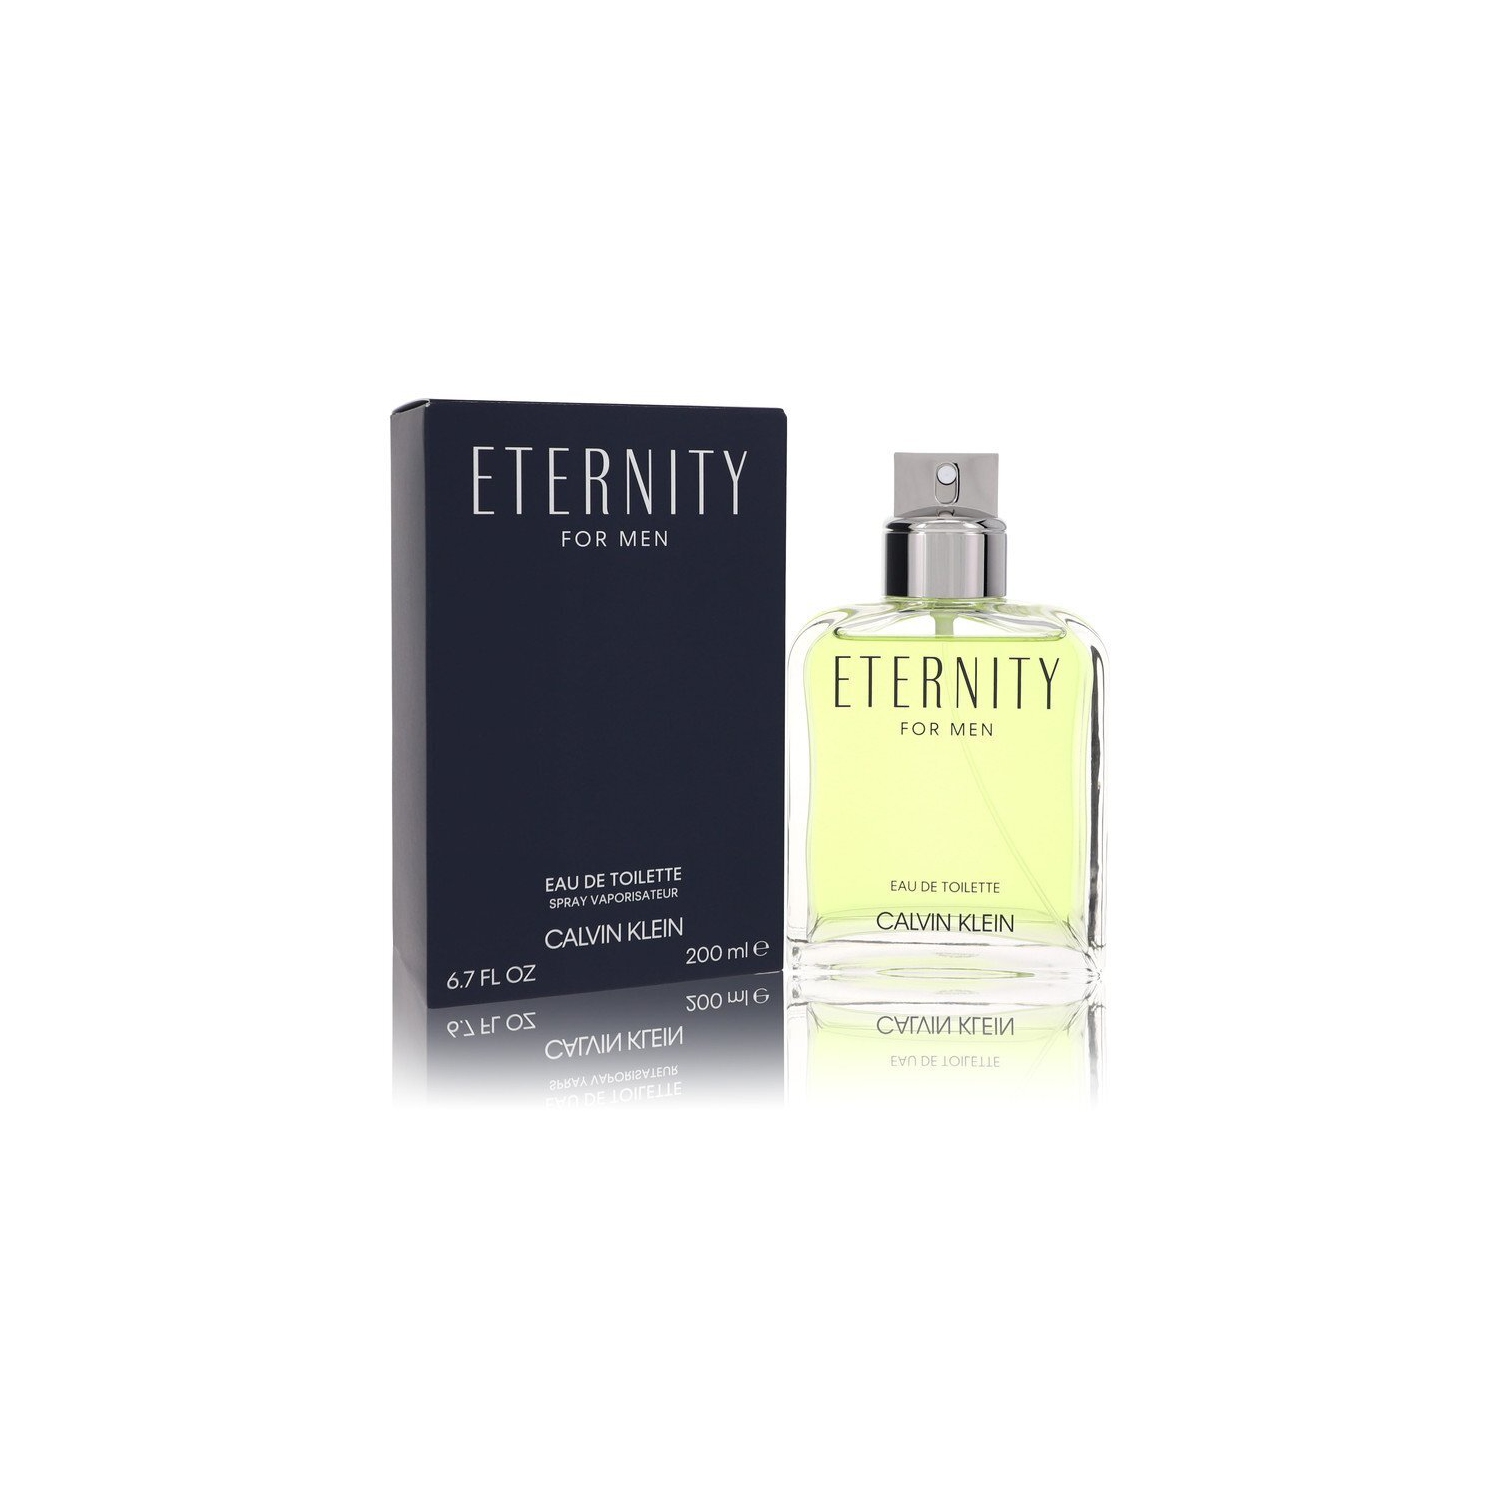 Perfumes Guyana - Eternity For Men by Calvin Klein Price